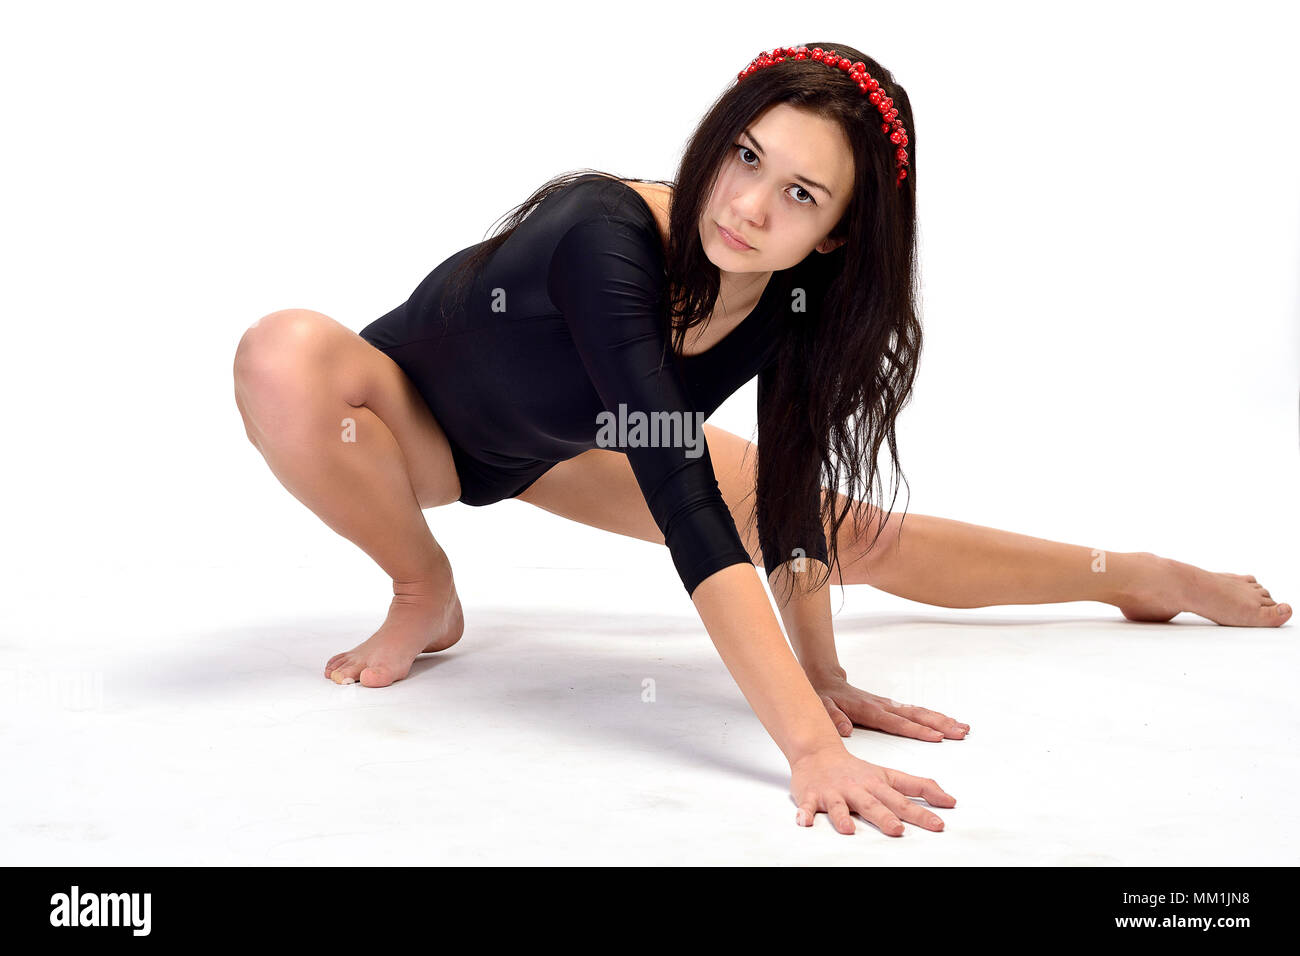 Girl, brunette, performs gymnastic exercises, athletic black body (isolated on white) Stock Photo